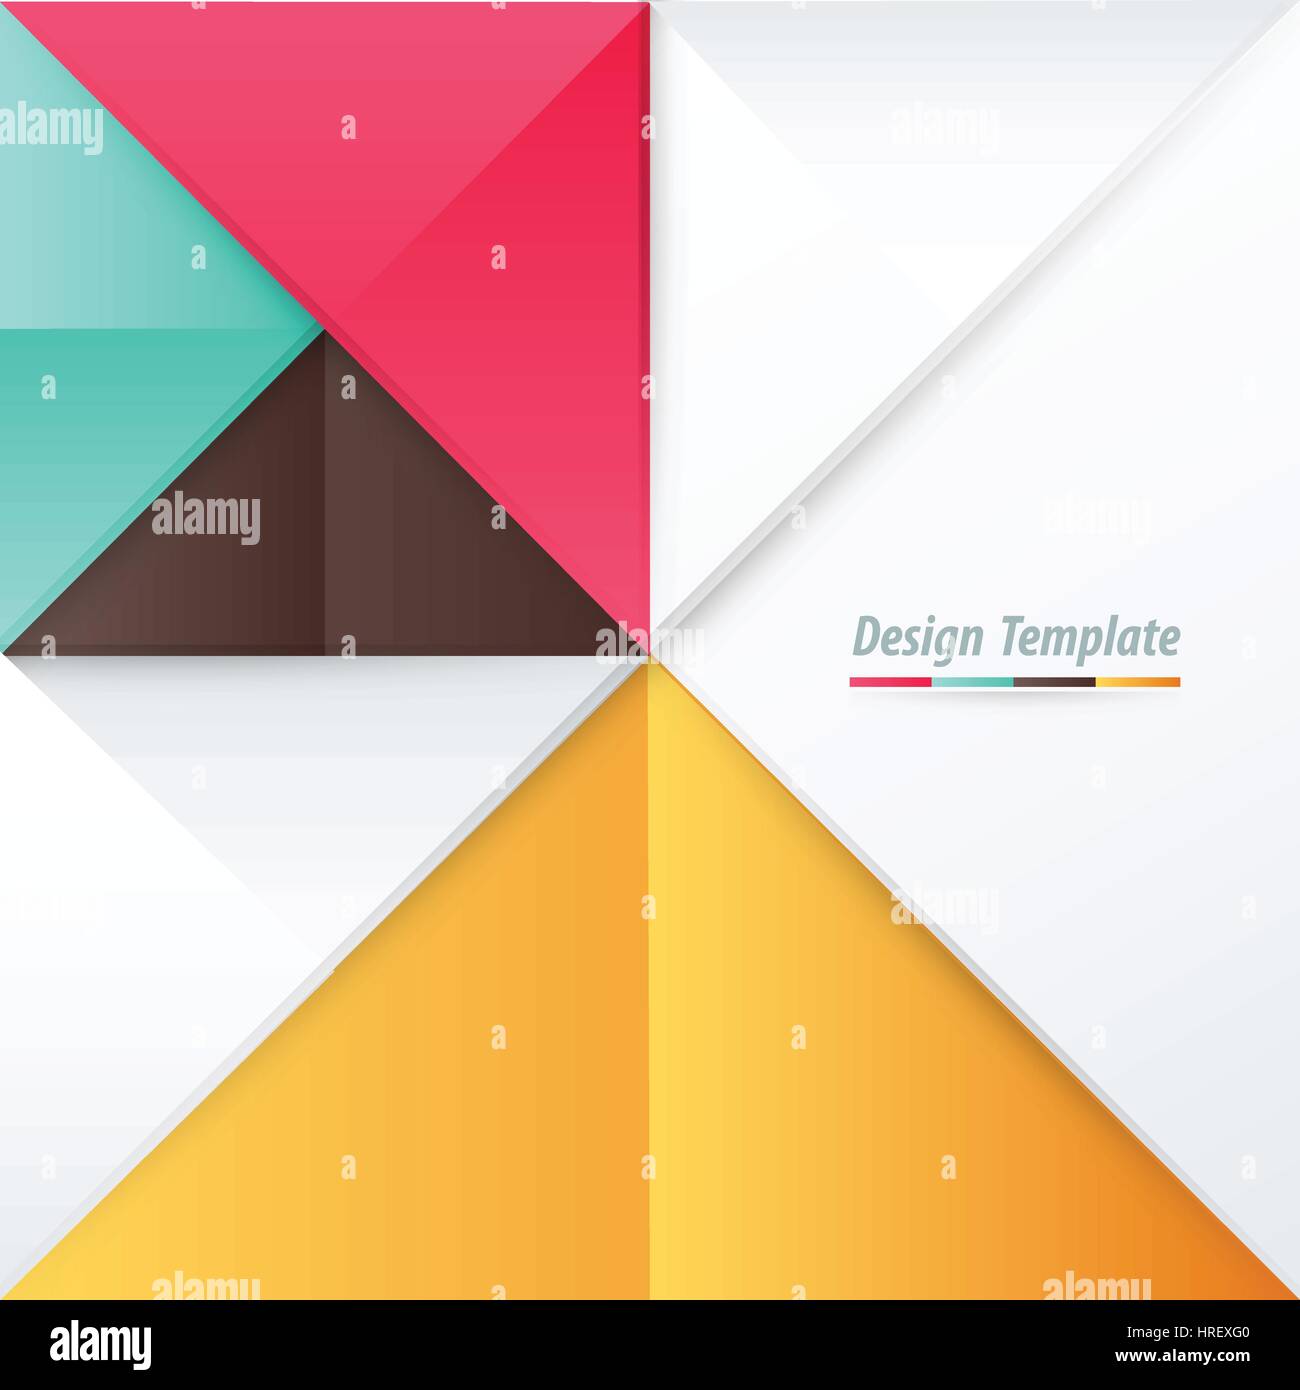 Template Design Triangle rose, bleu, orange, marron. Illustration de Vecteur